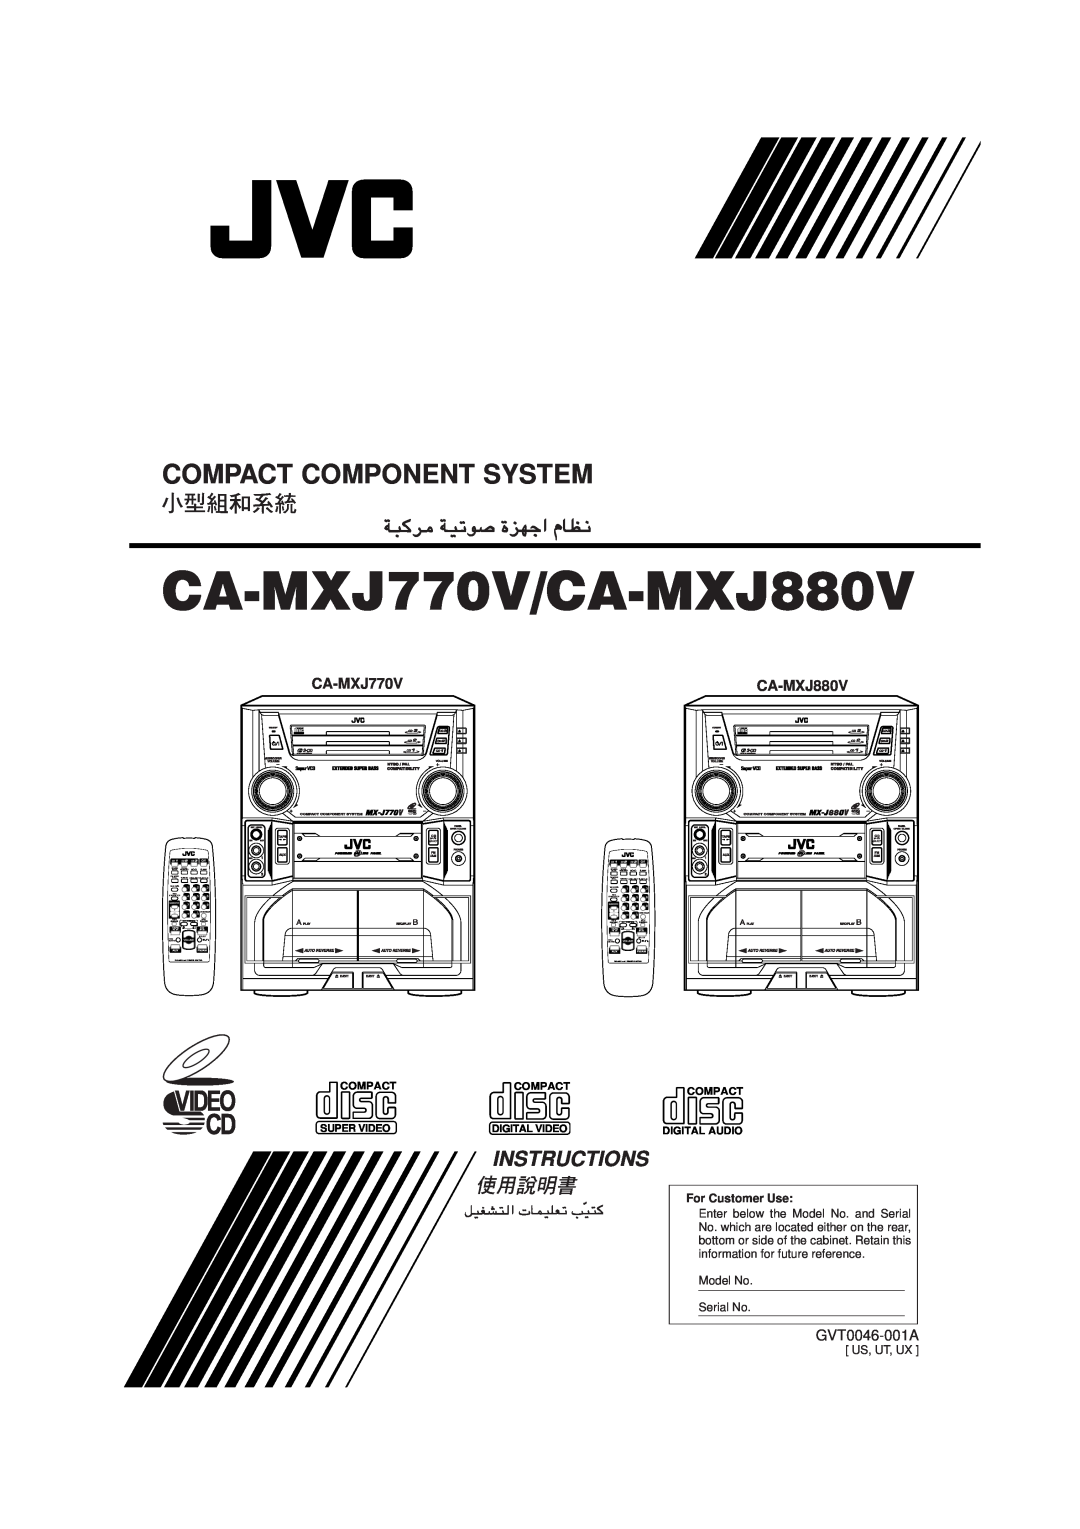 JVC manual CA-MXJ770V/CA-MXJ880V, Compact Component System, Instructions, GVT0046-001A, For Customer Use, Us, Ut, Ux 